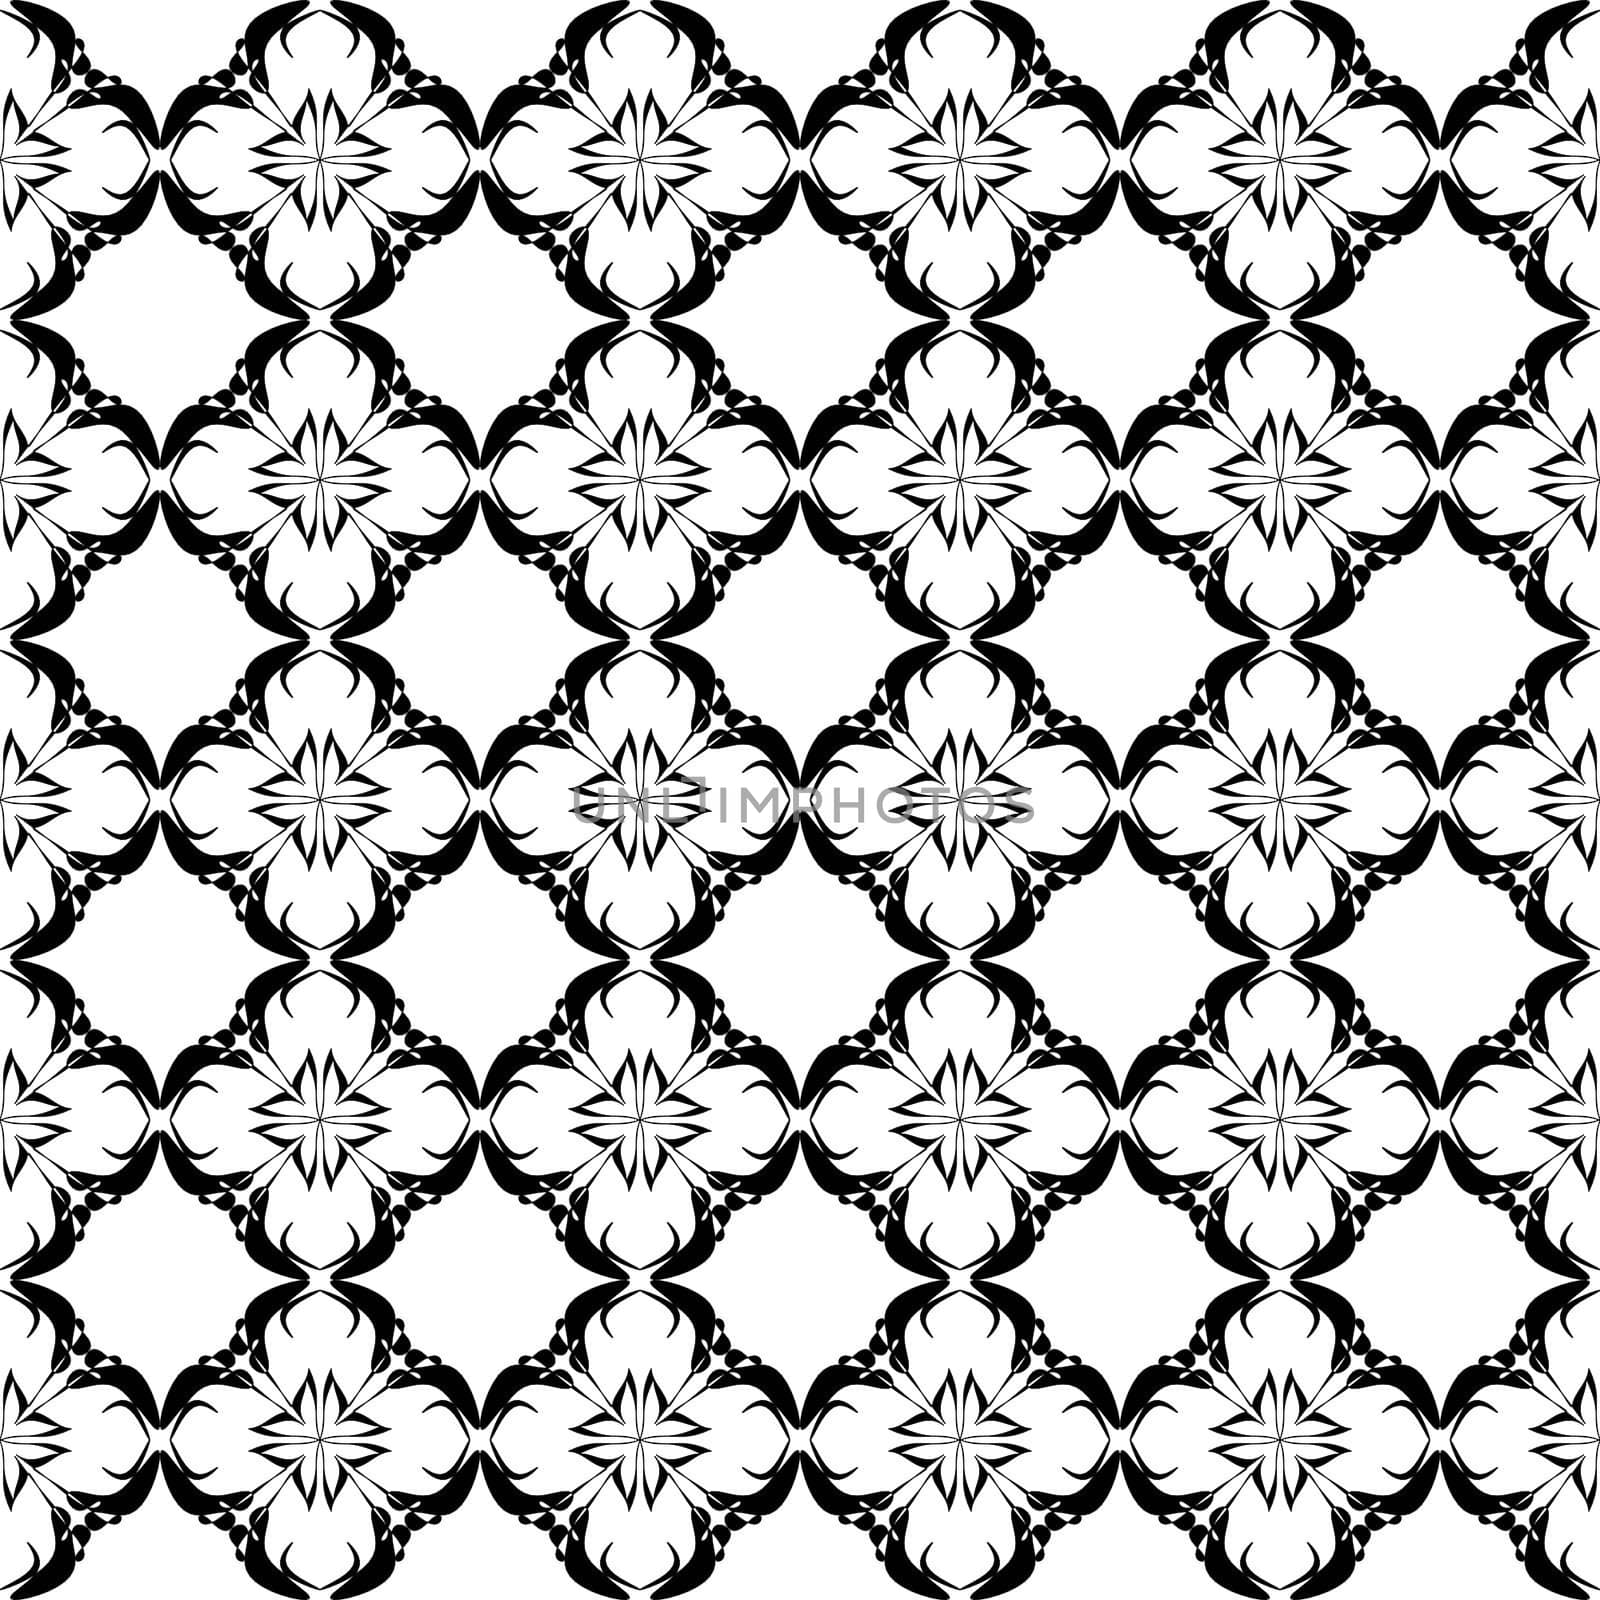 Wallpaper pattern by Nickondr